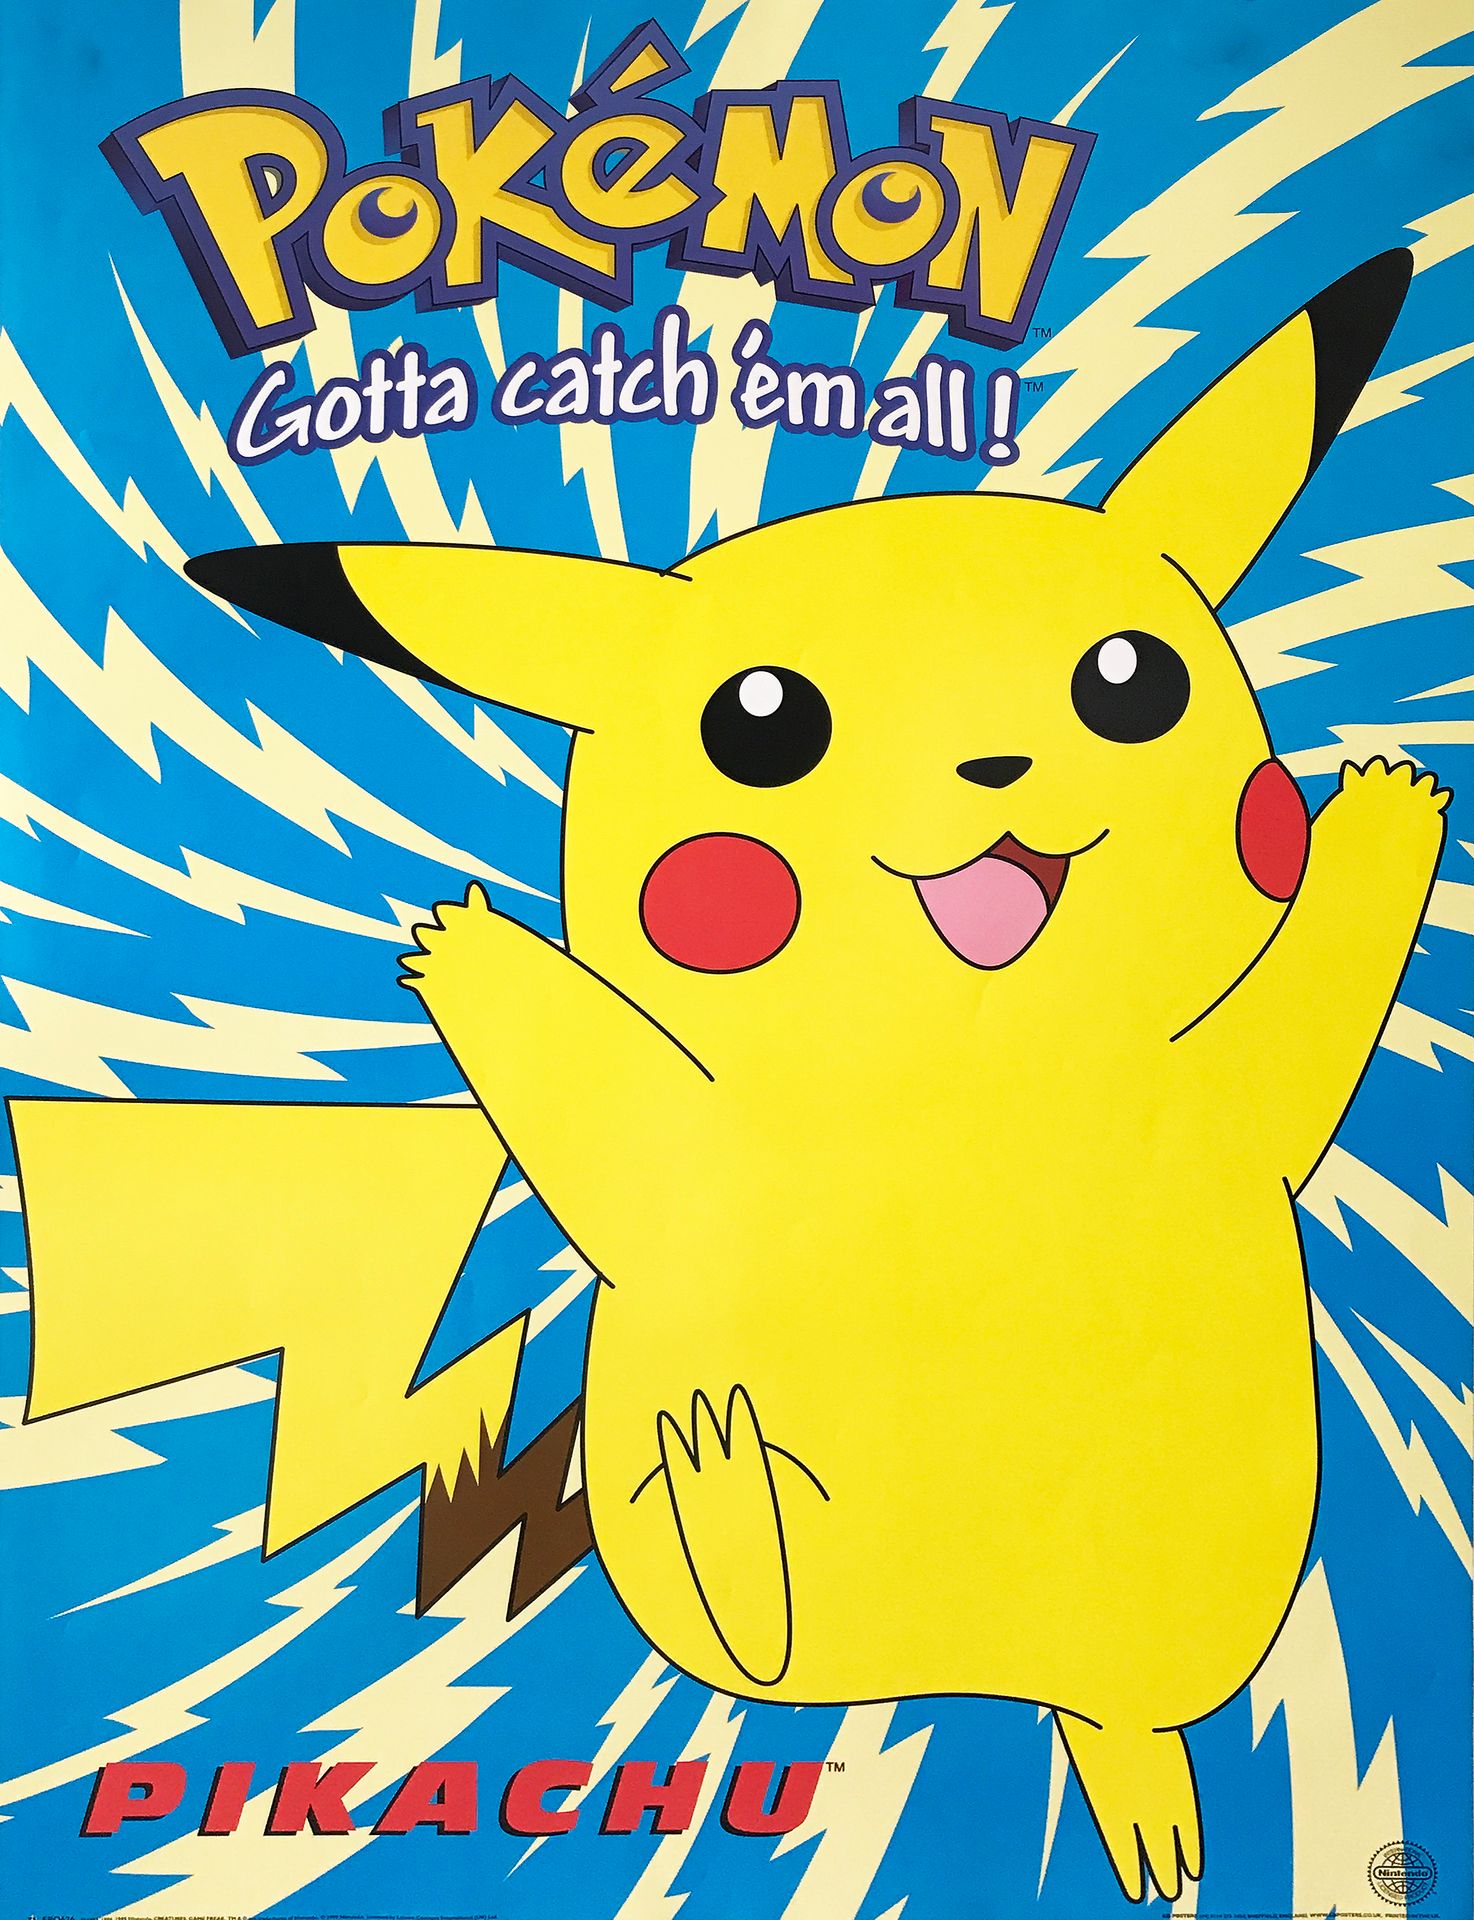 Null 
POKÉMON - Pikachu "Bisogna catturarli tutti
Poster laminato
Nintendo, 1999&hellip;